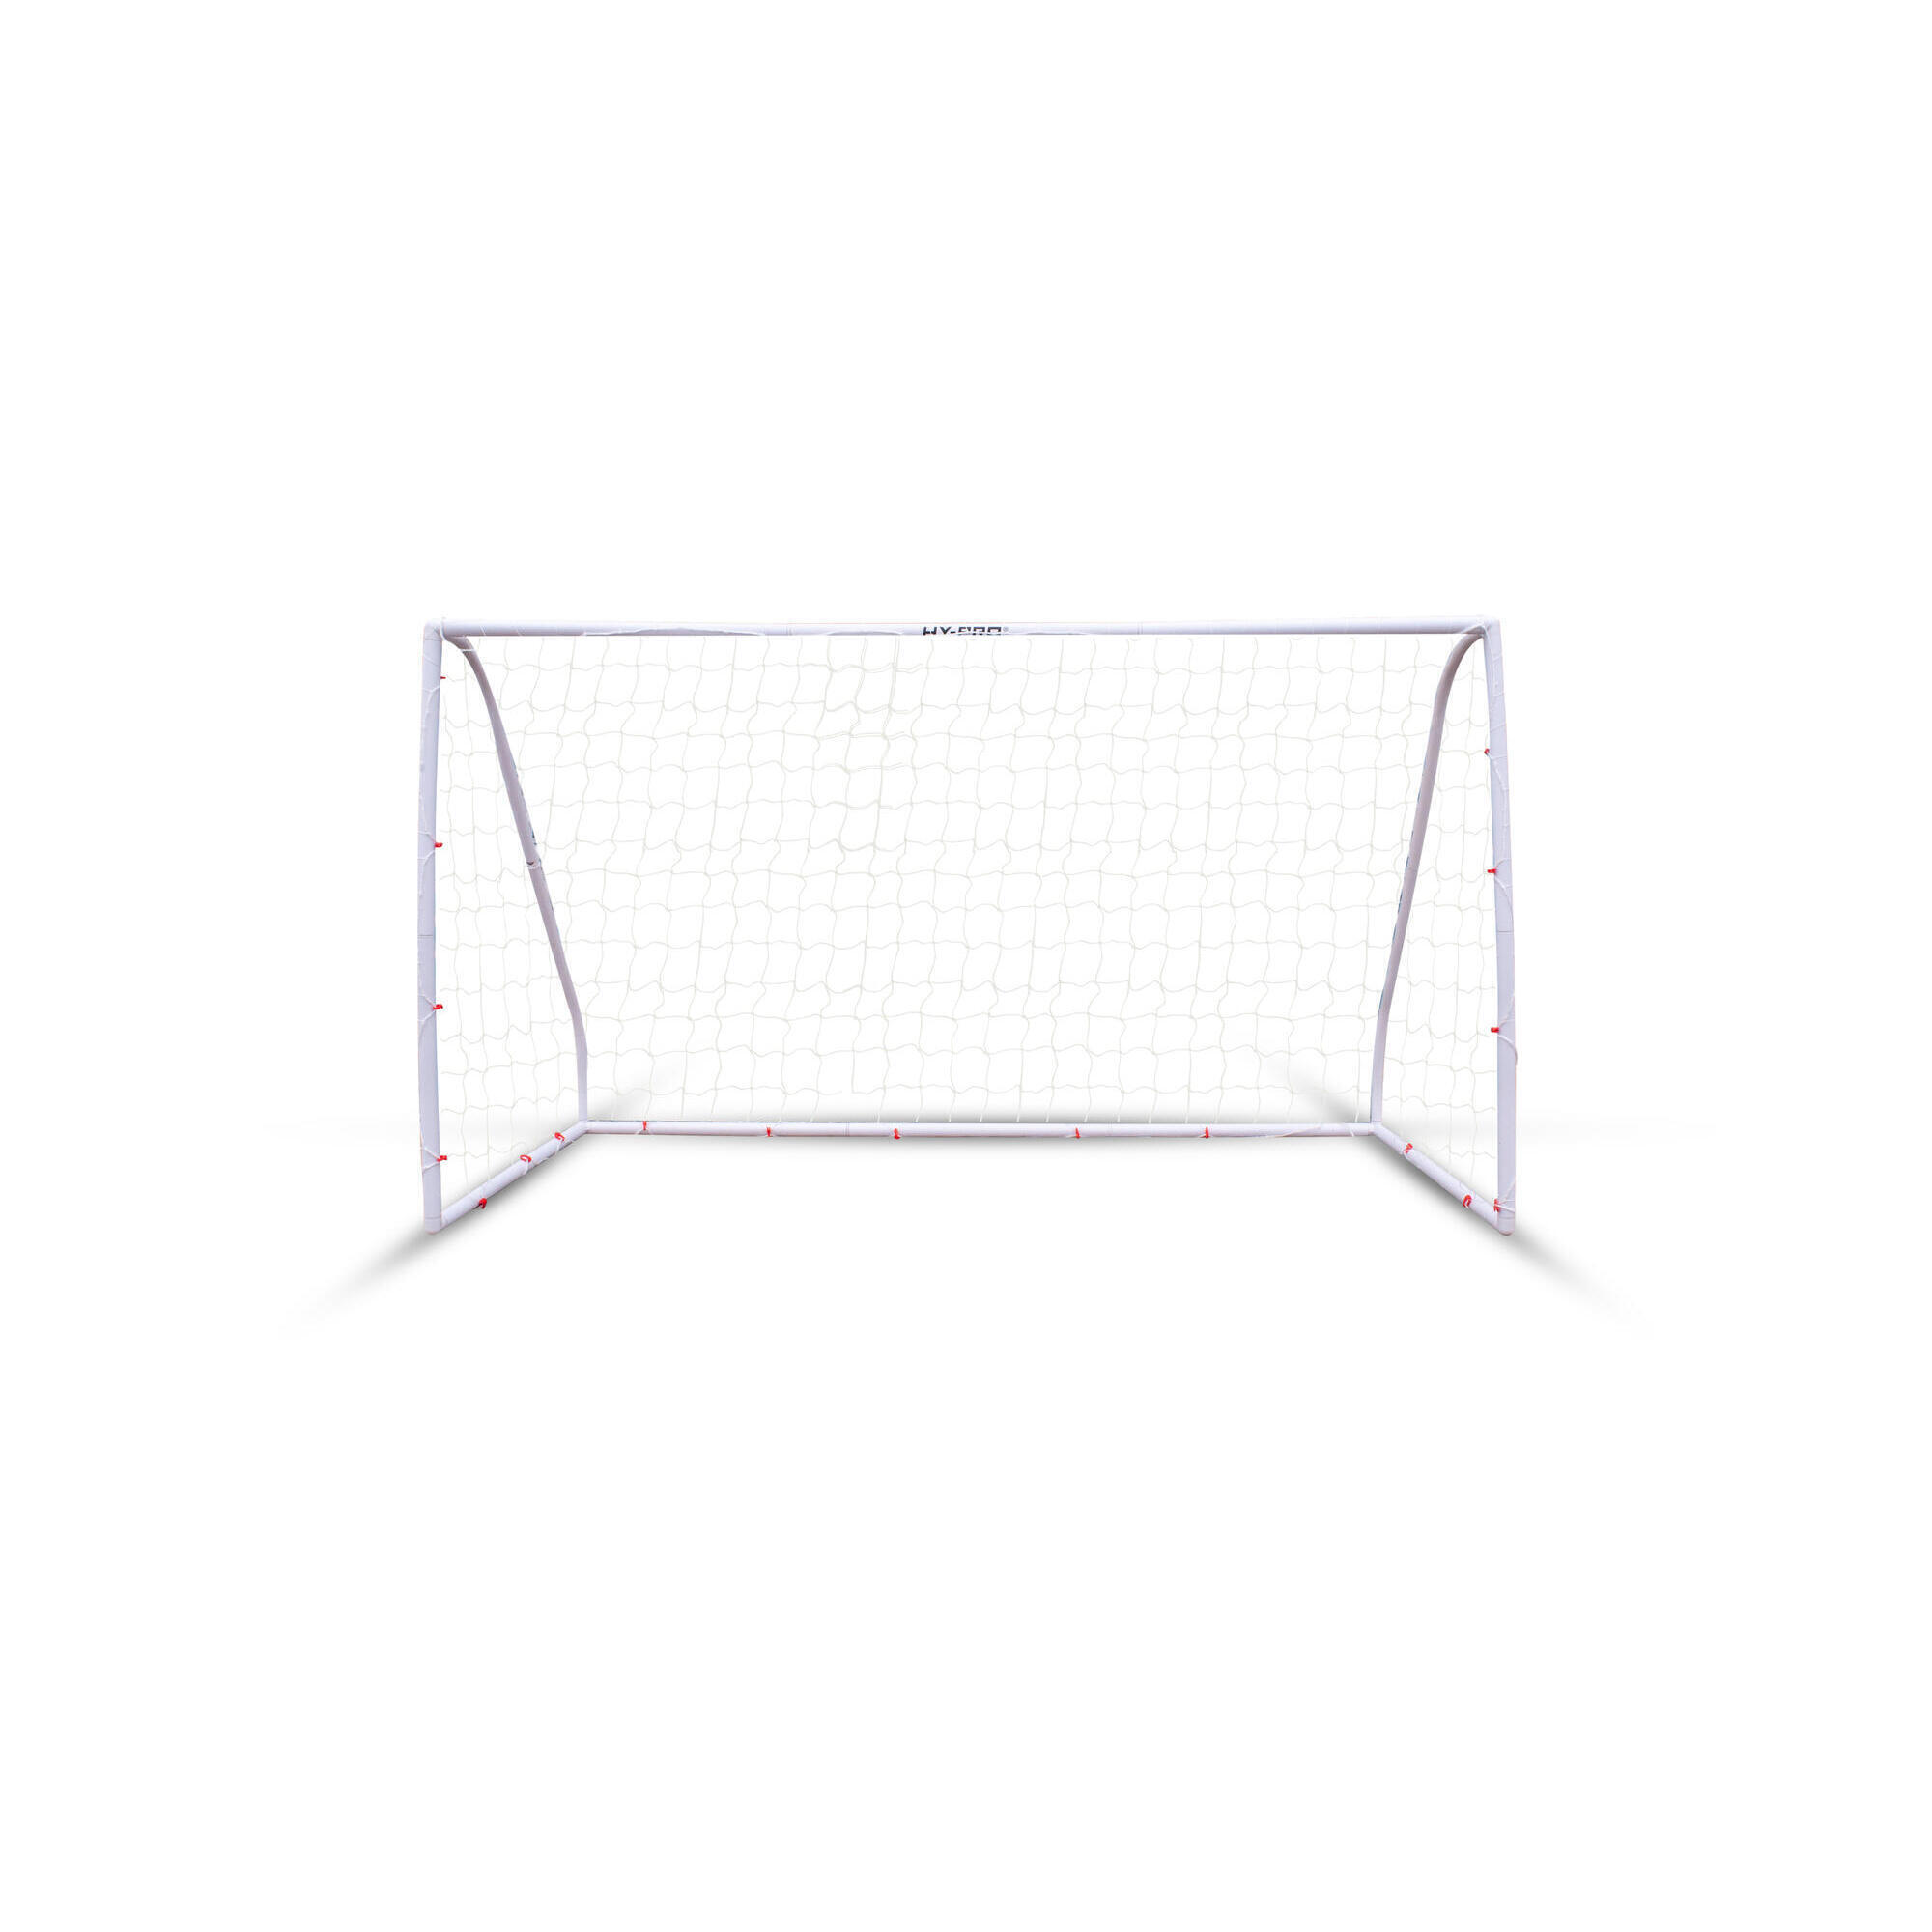 HY-PRO Hy-Pro 10' x 6' PVC Goal